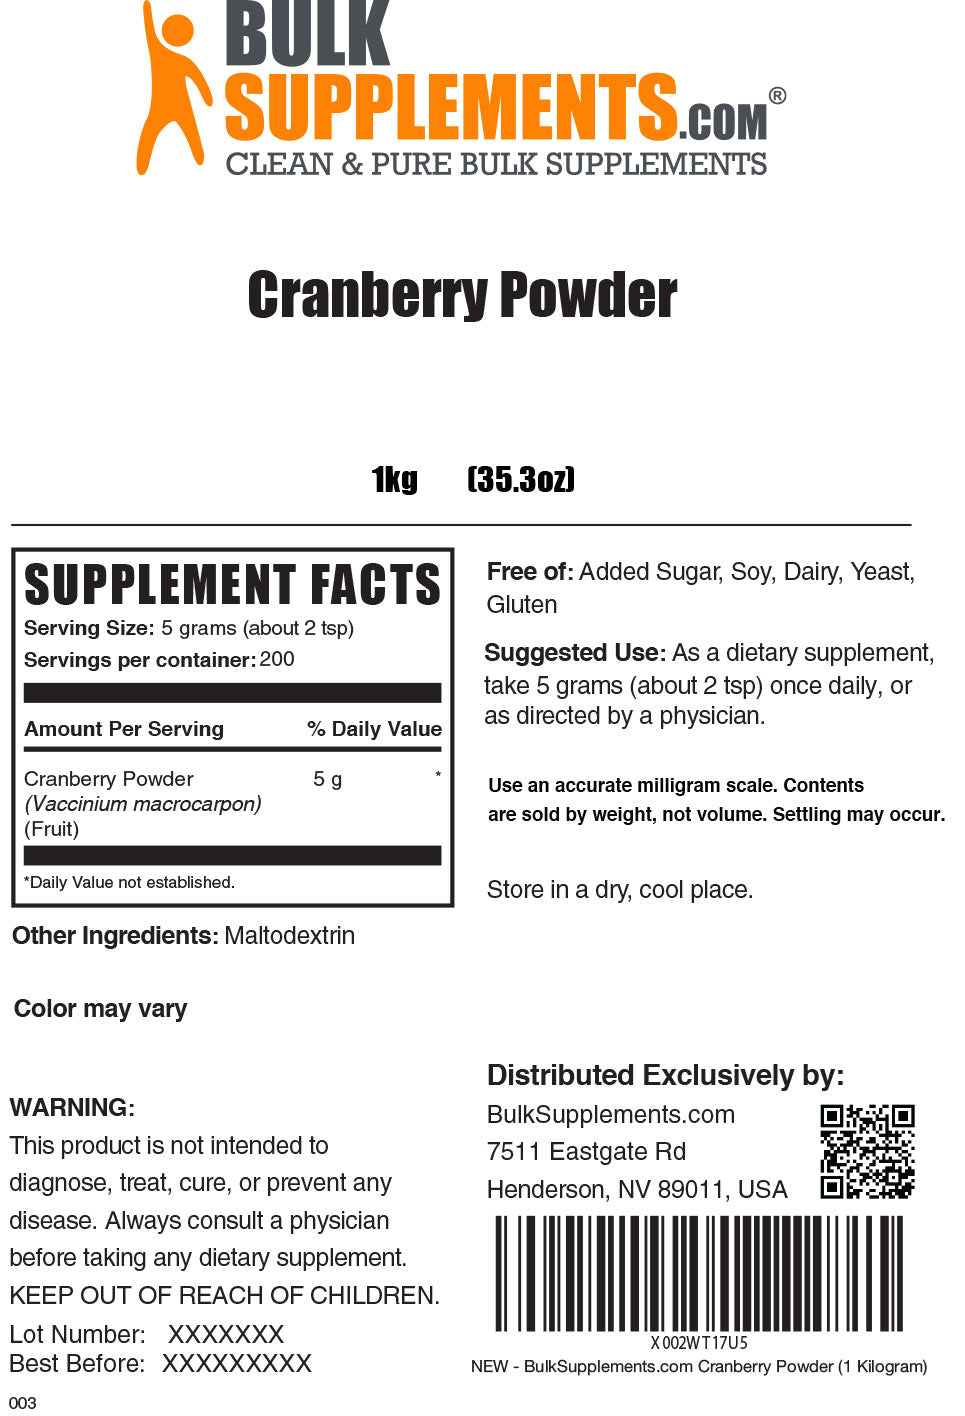 1kg Cranberry Powder Supplement Facts